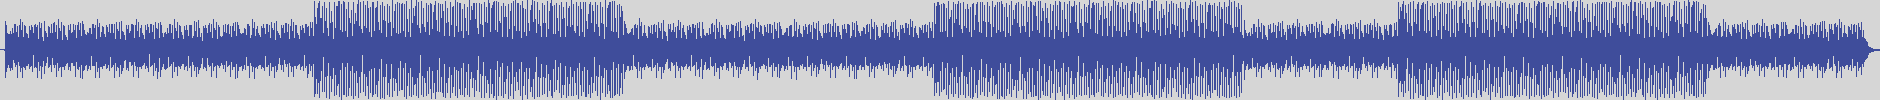 nf_boyz_records [NFY073] Cubo Boys - Baby Park [Original Mix] audio wave form